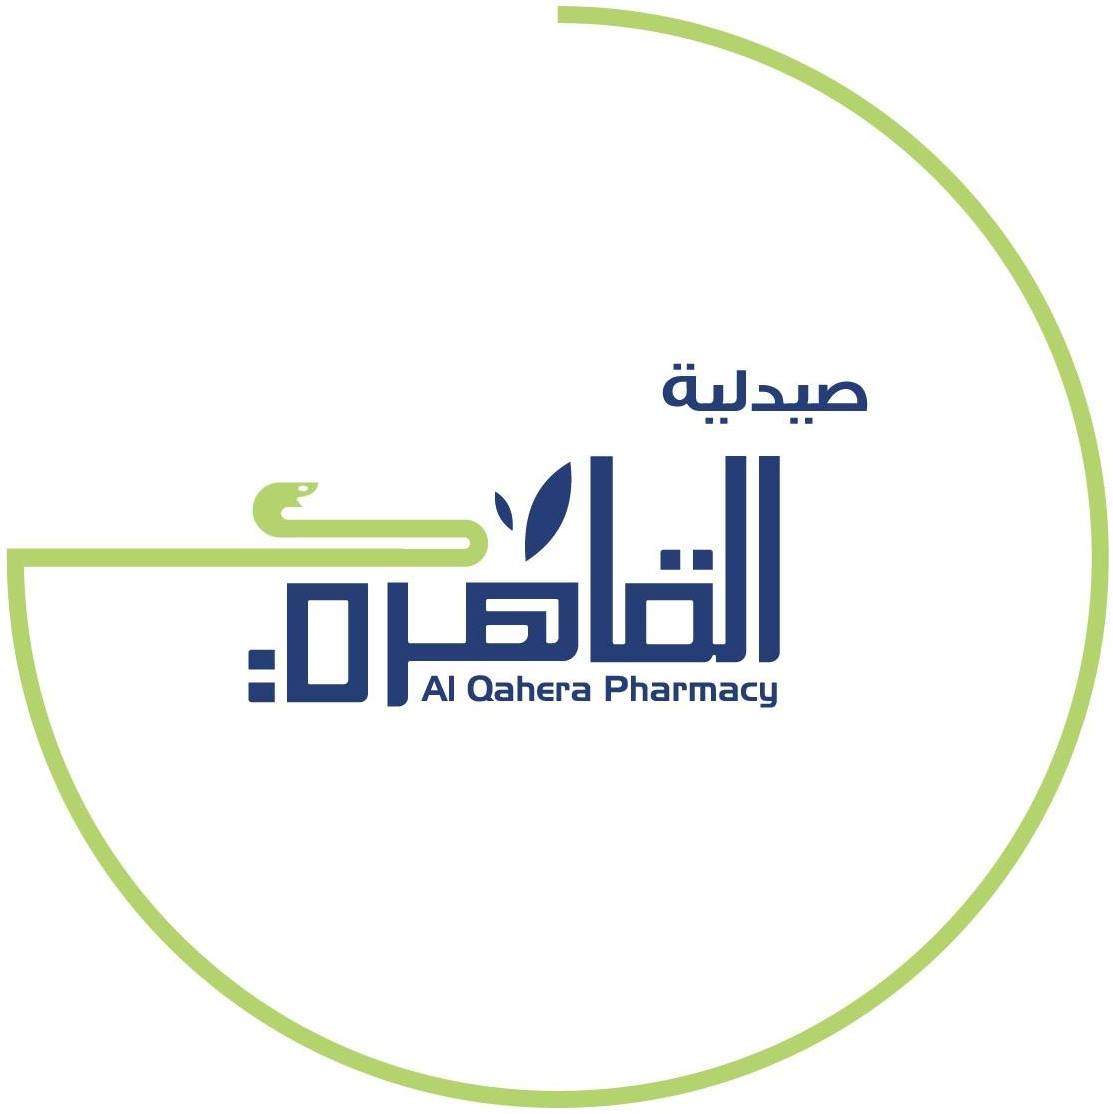 Al Qahera Pharmacies